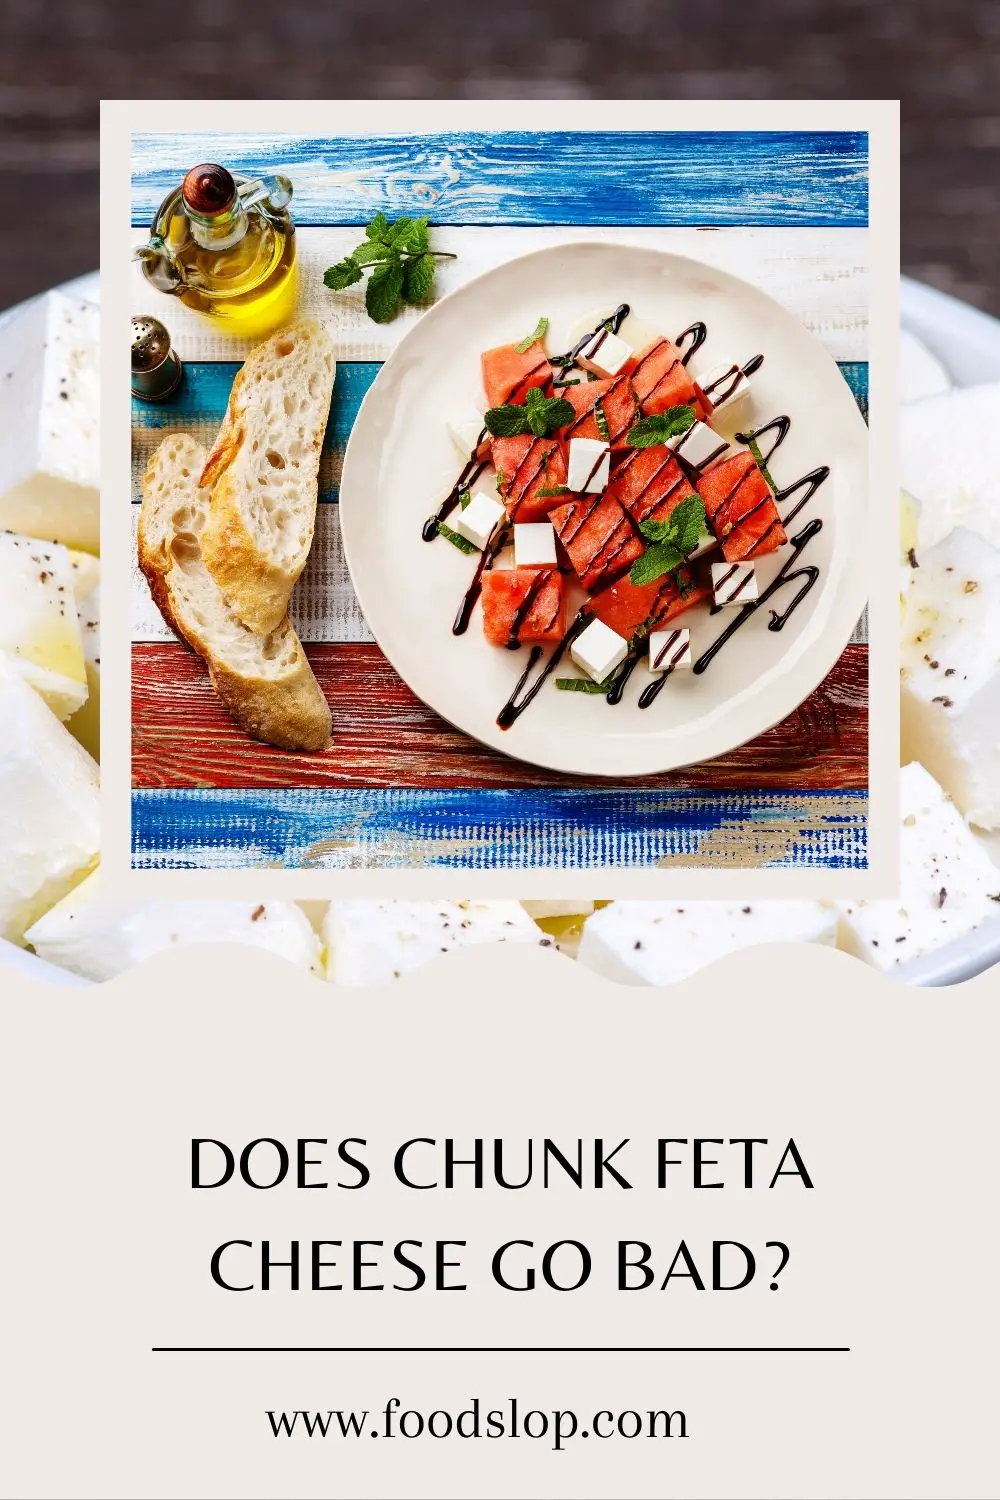 Does Chunk Feta Cheese Go Bad?